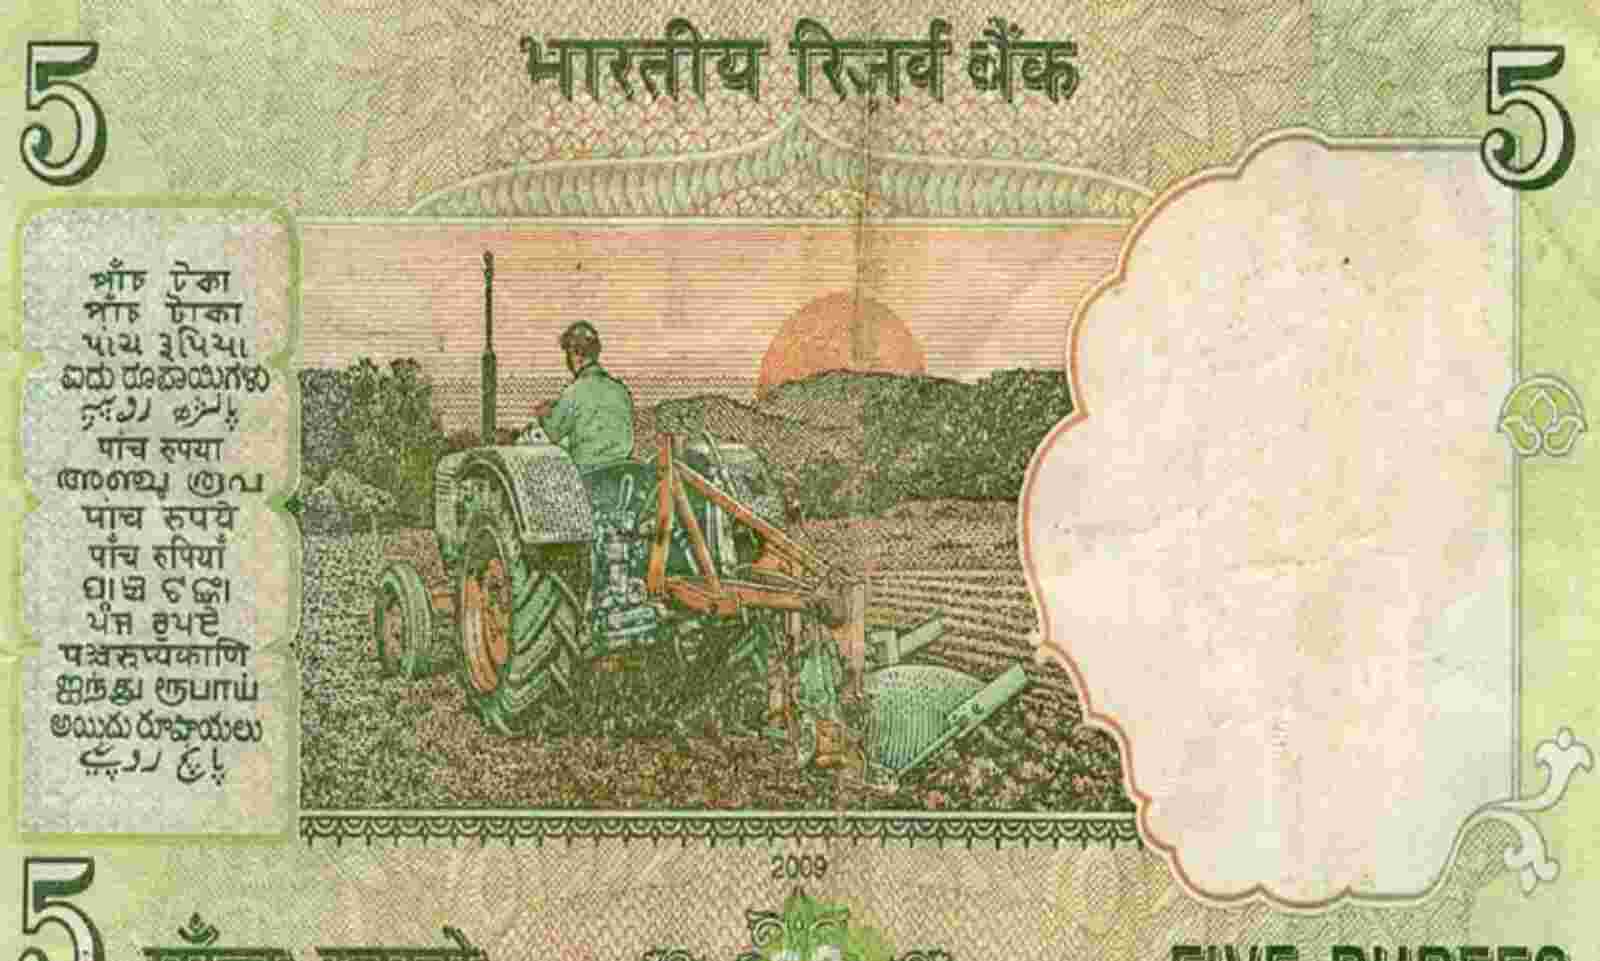 unique notes of 5 rupees